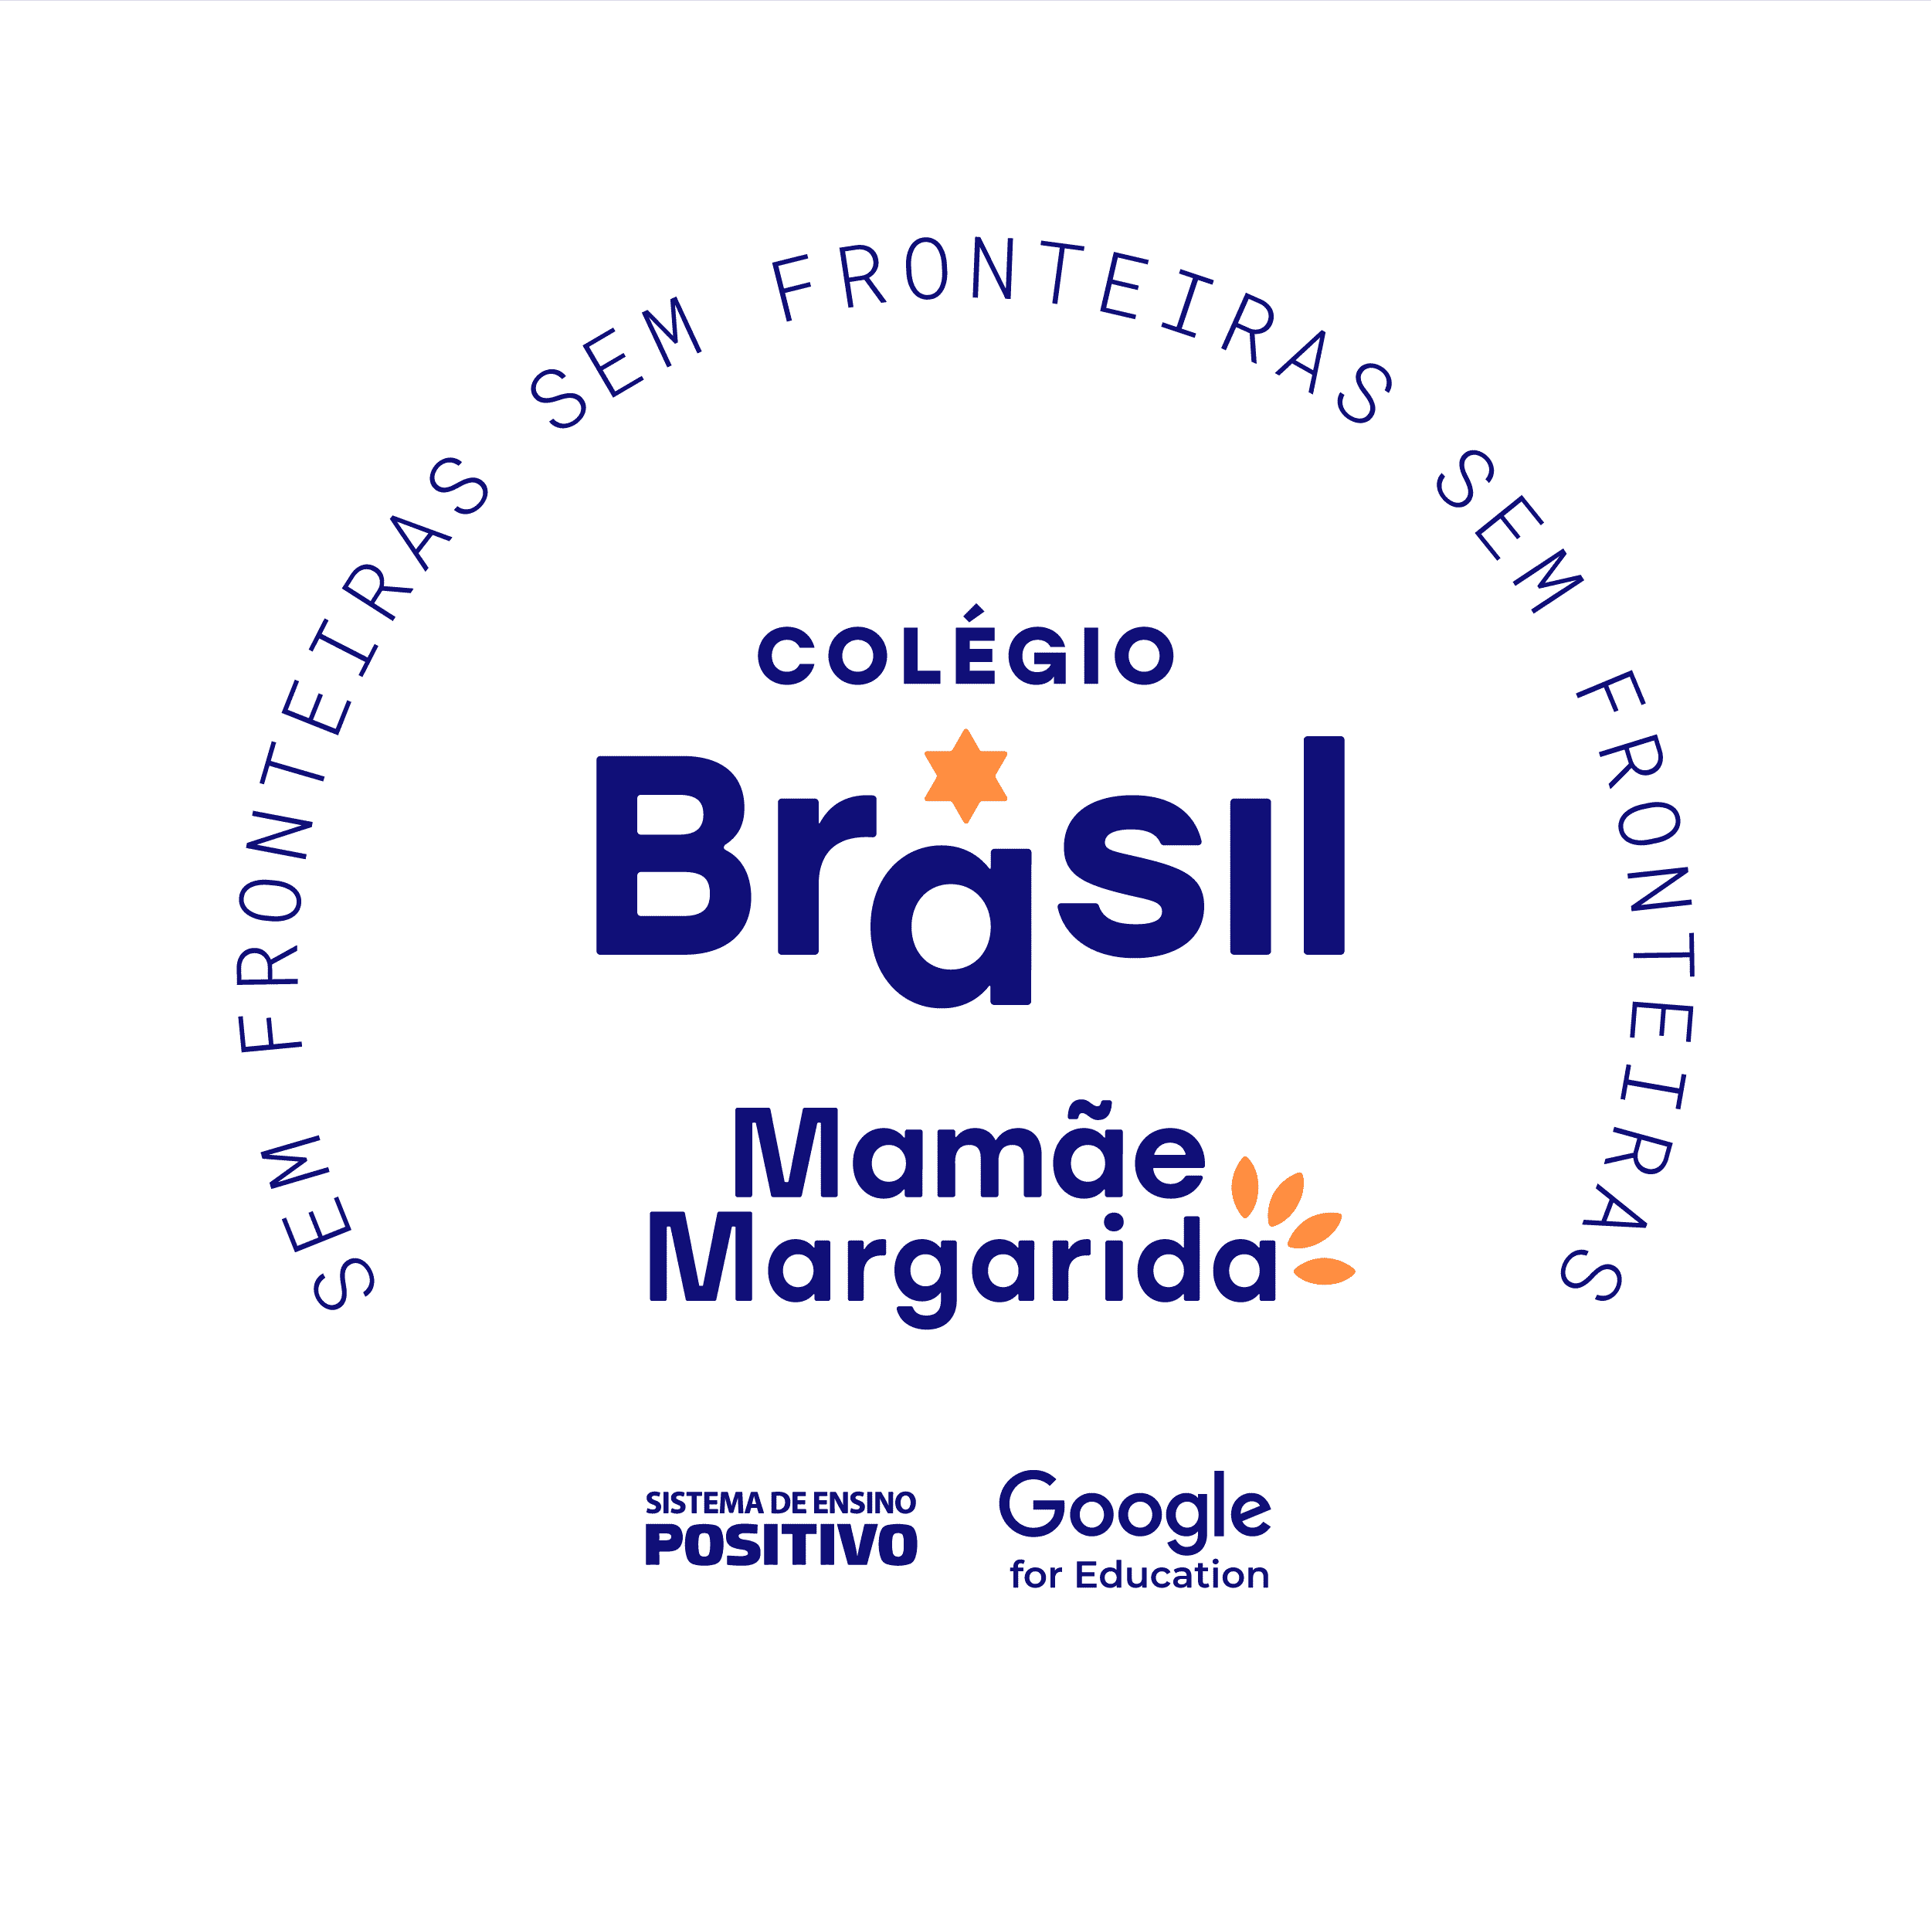  Colégio Brasil Mamãe Margarida 